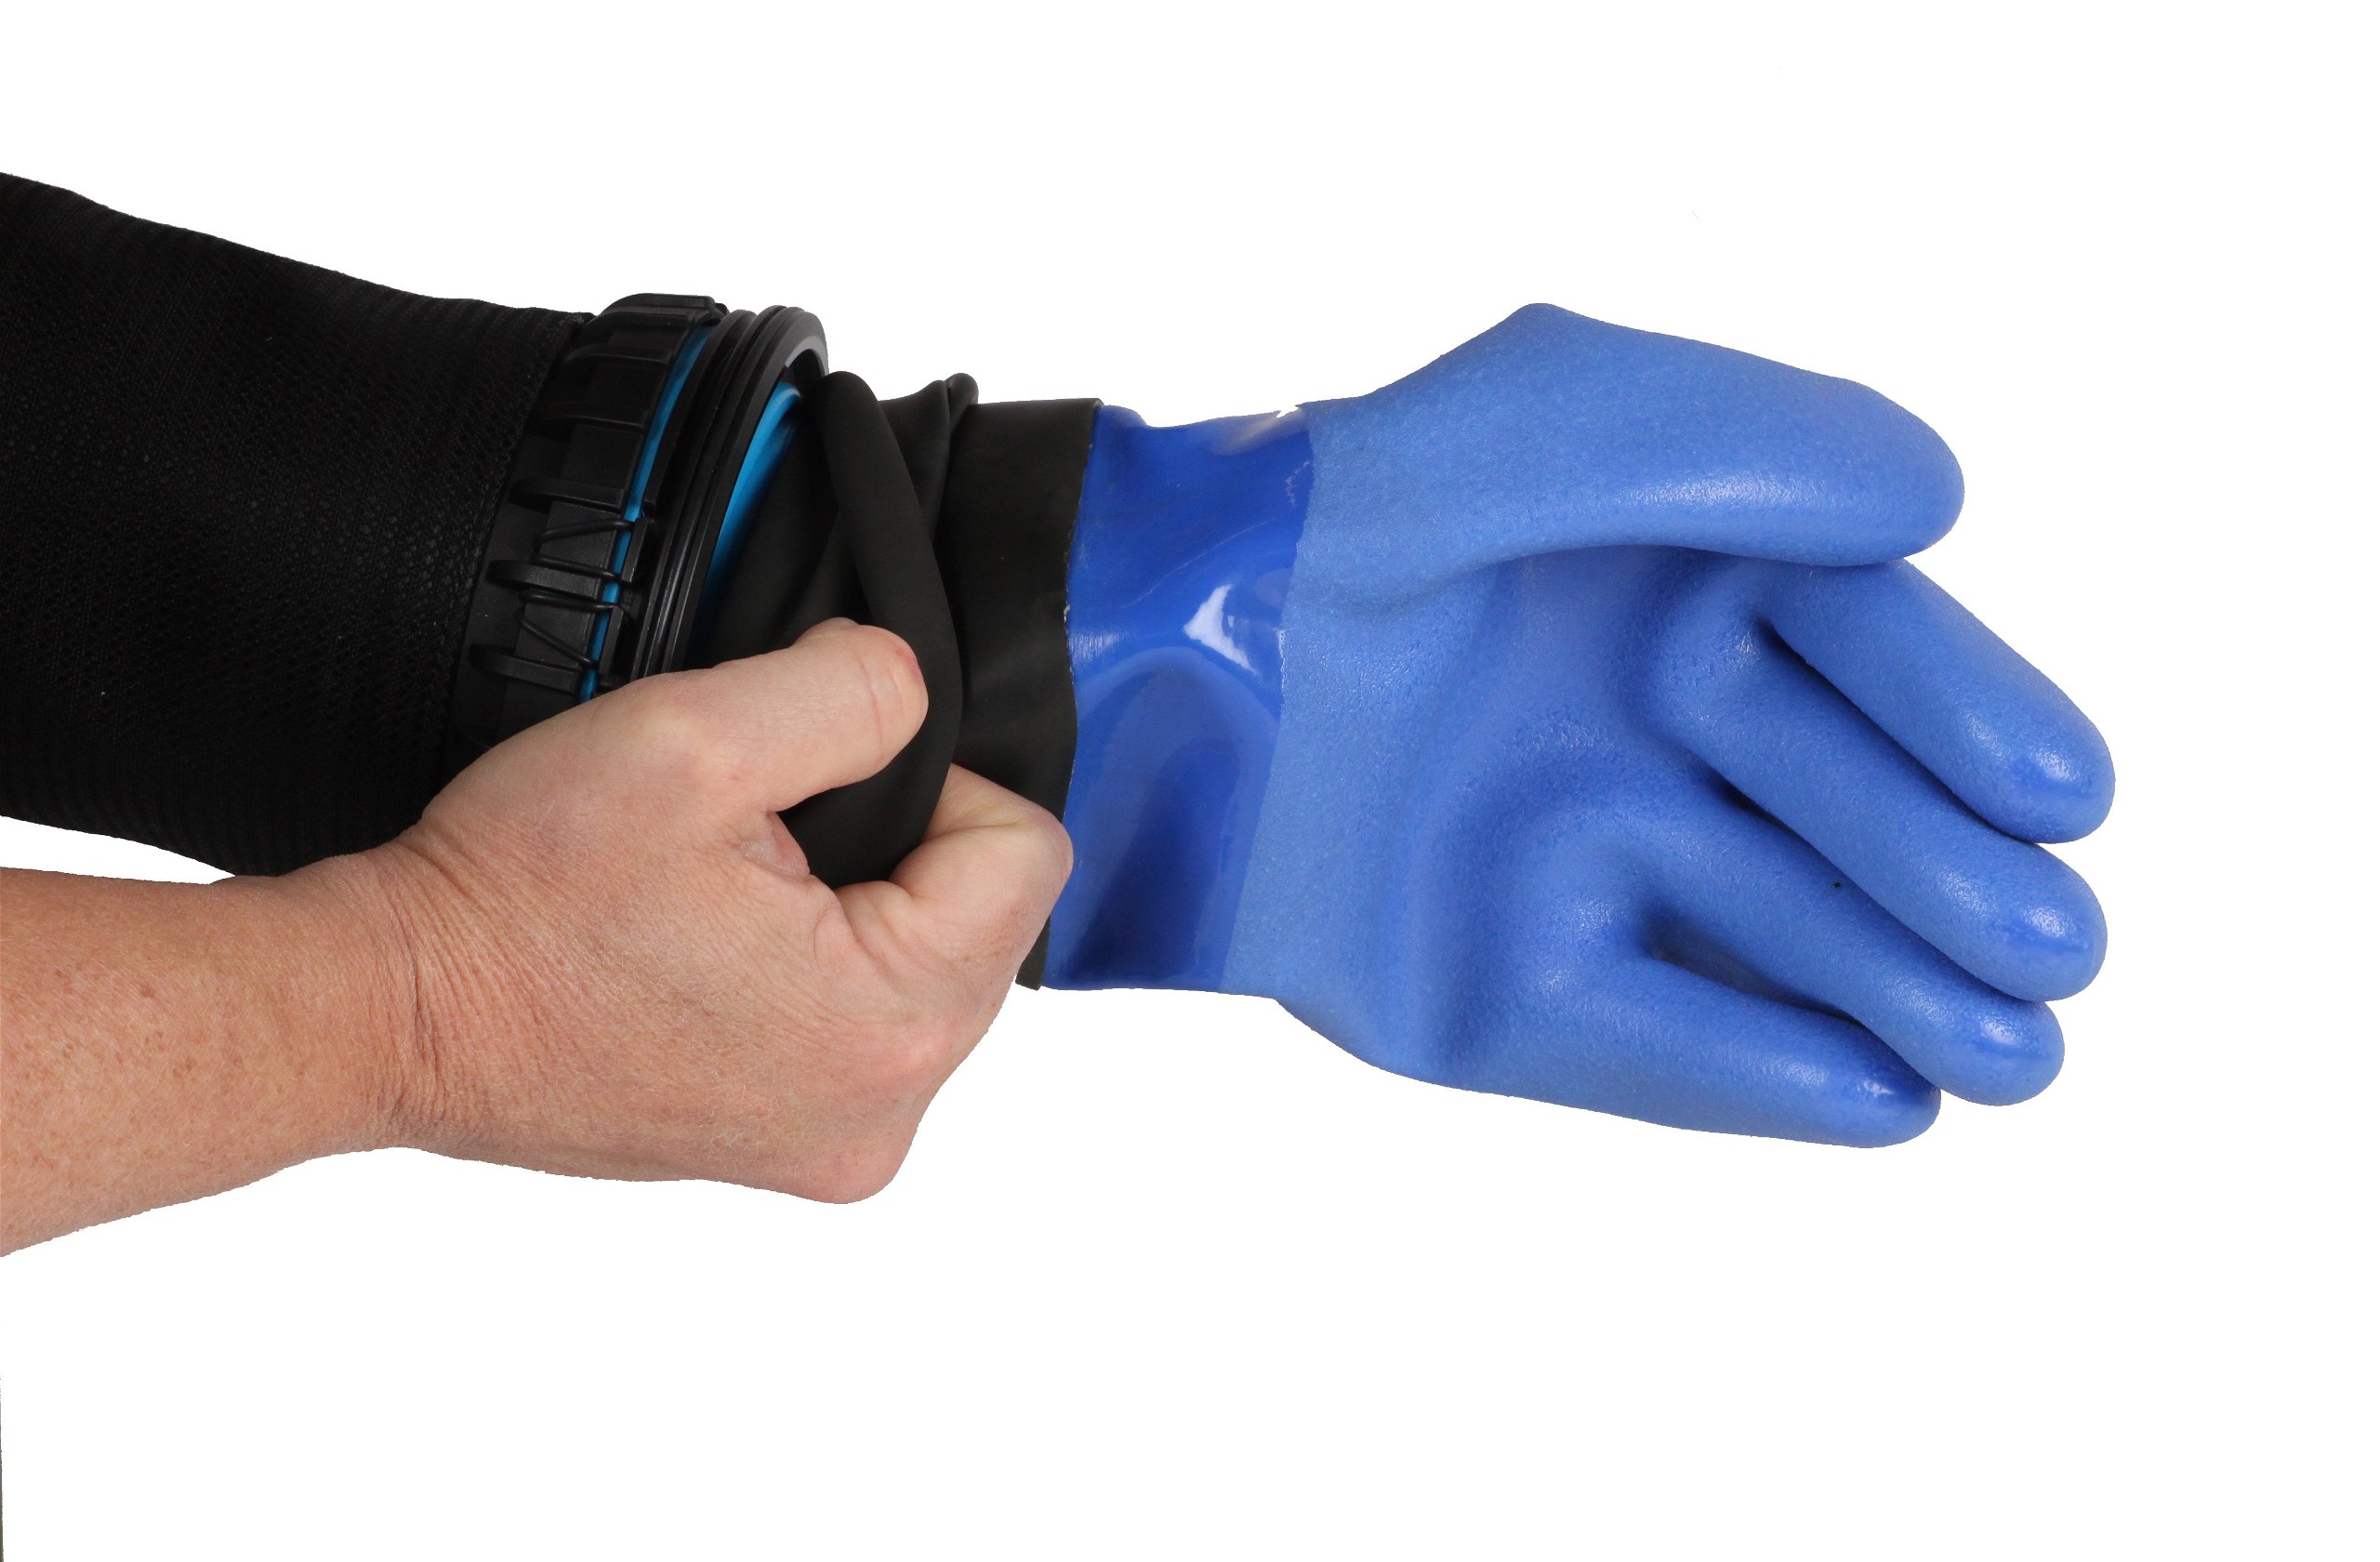 SI TECH's NEVA Dry Glove System